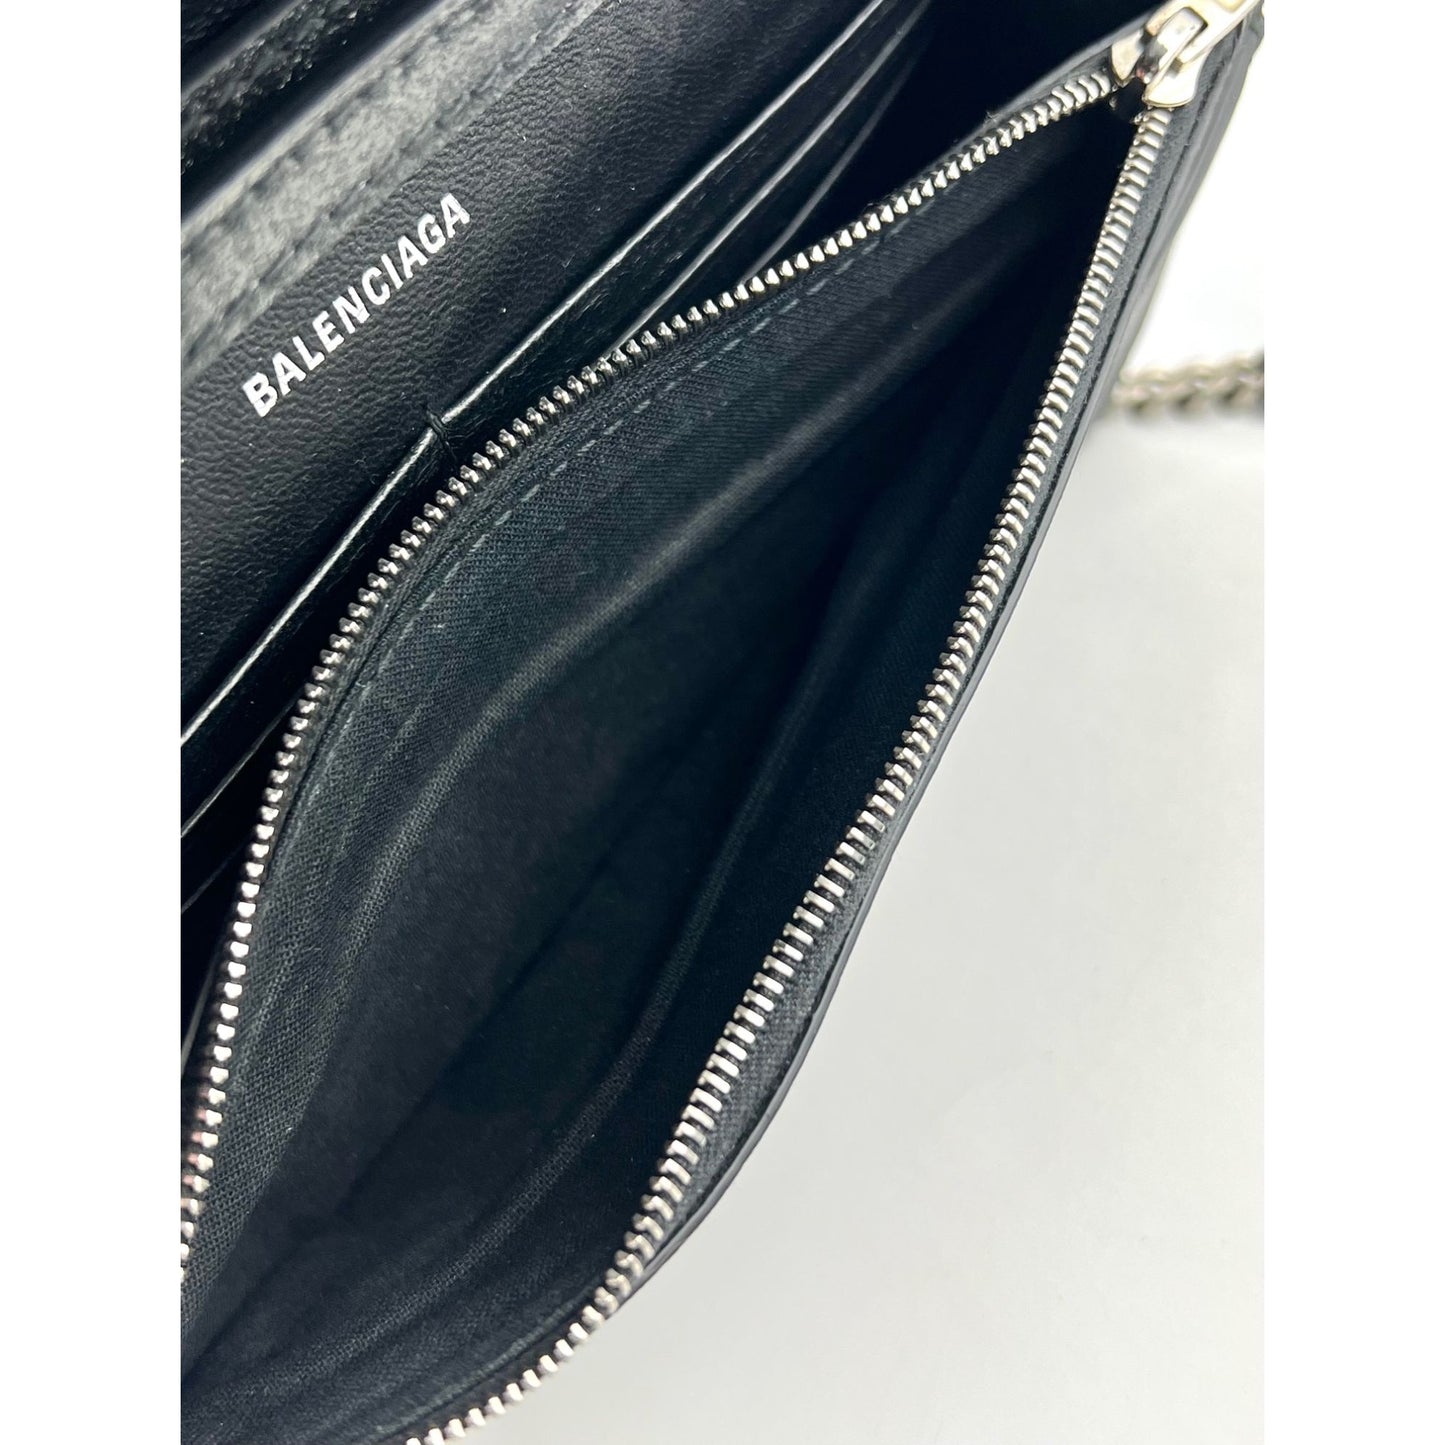 Balenciaga Black Hourglass chain wallet